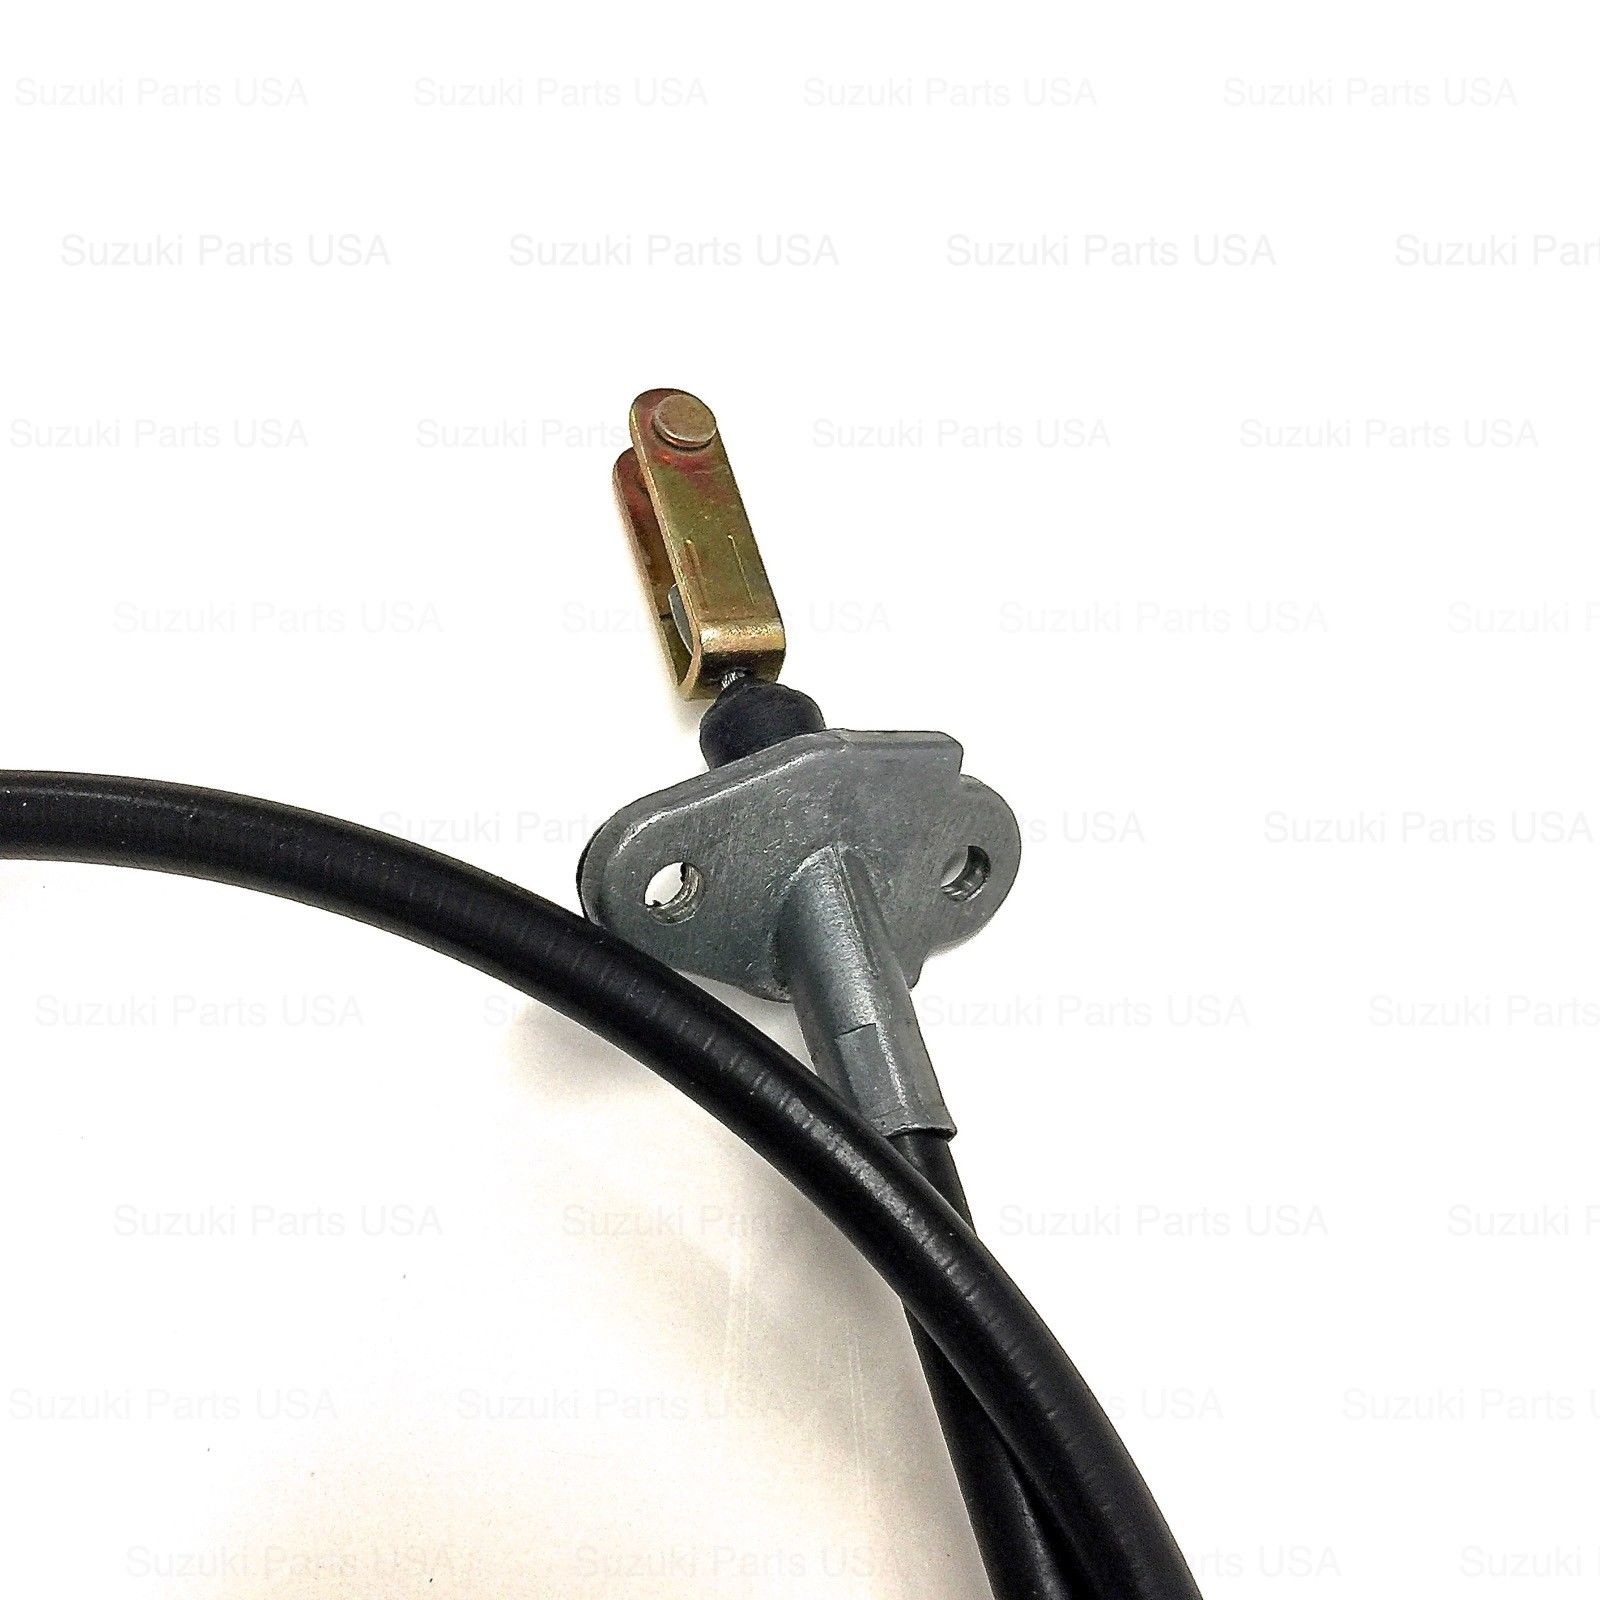 Suzuki SJ413 Samurai 86-95 Clutch Cable Repair Kit Nut Spring Pin Washer